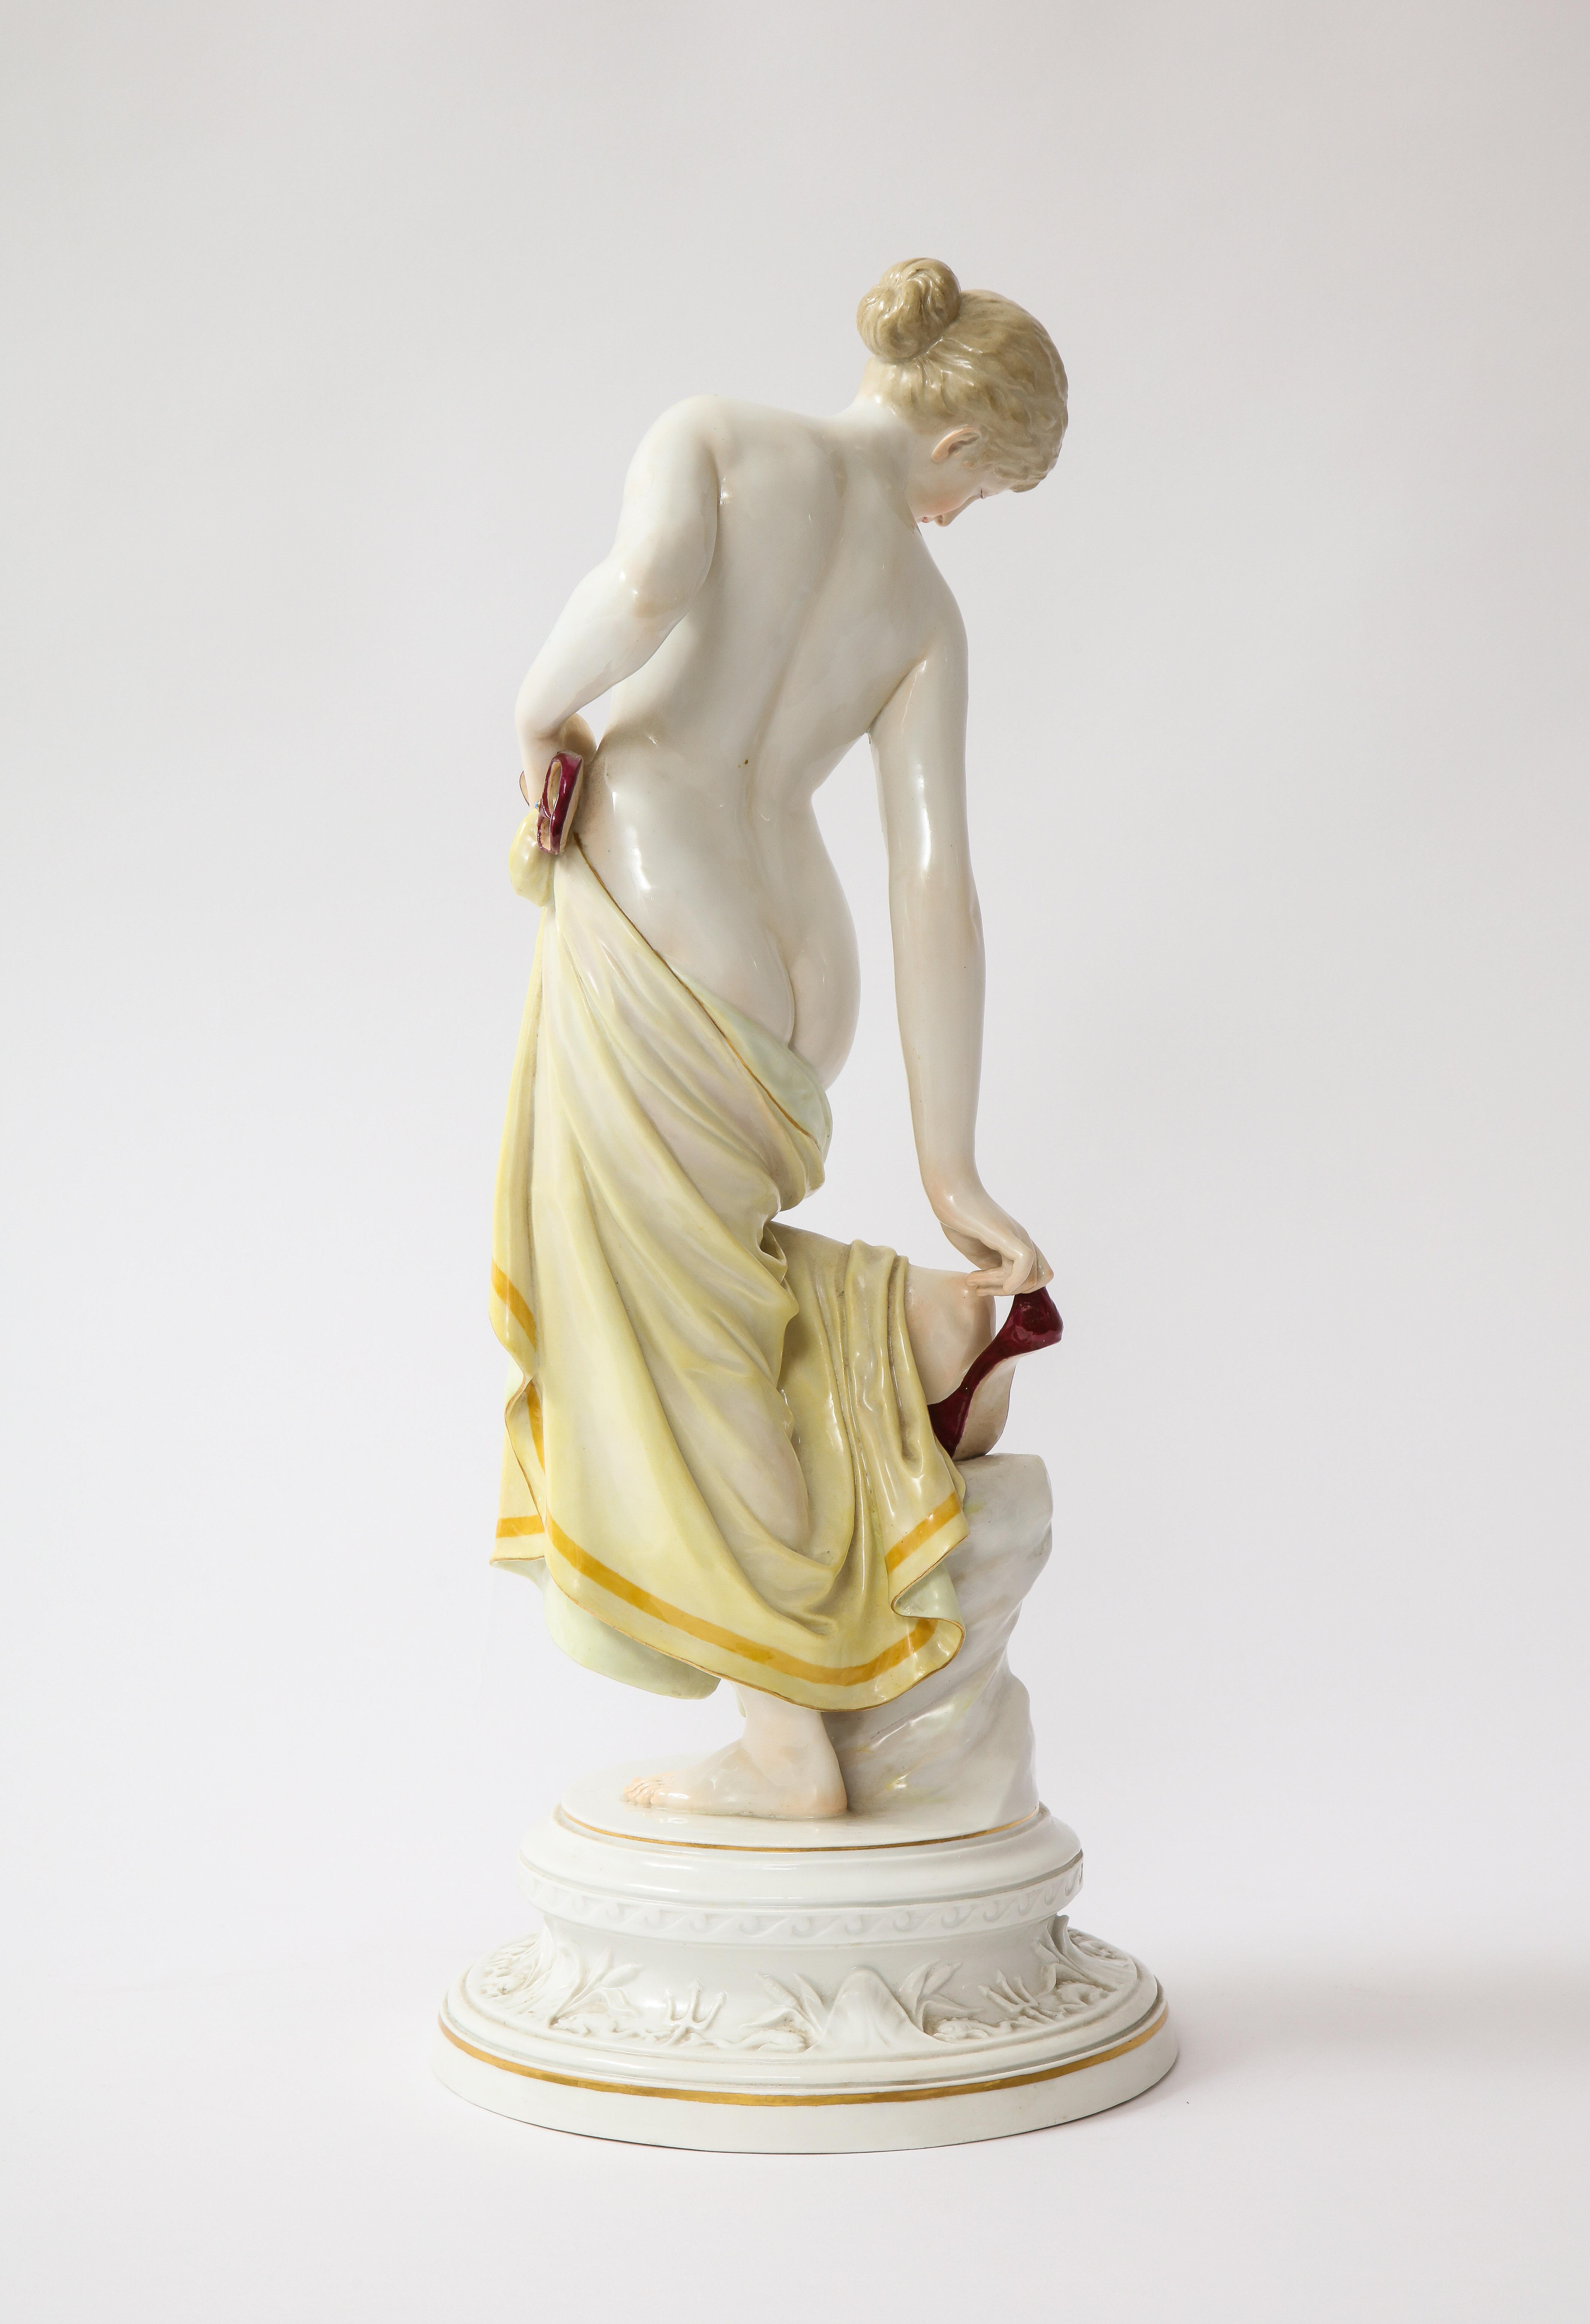 Gilt A 19th C. Meissen Porcelain Female Nude Figurine After The Bath, R. Ockelmann For Sale